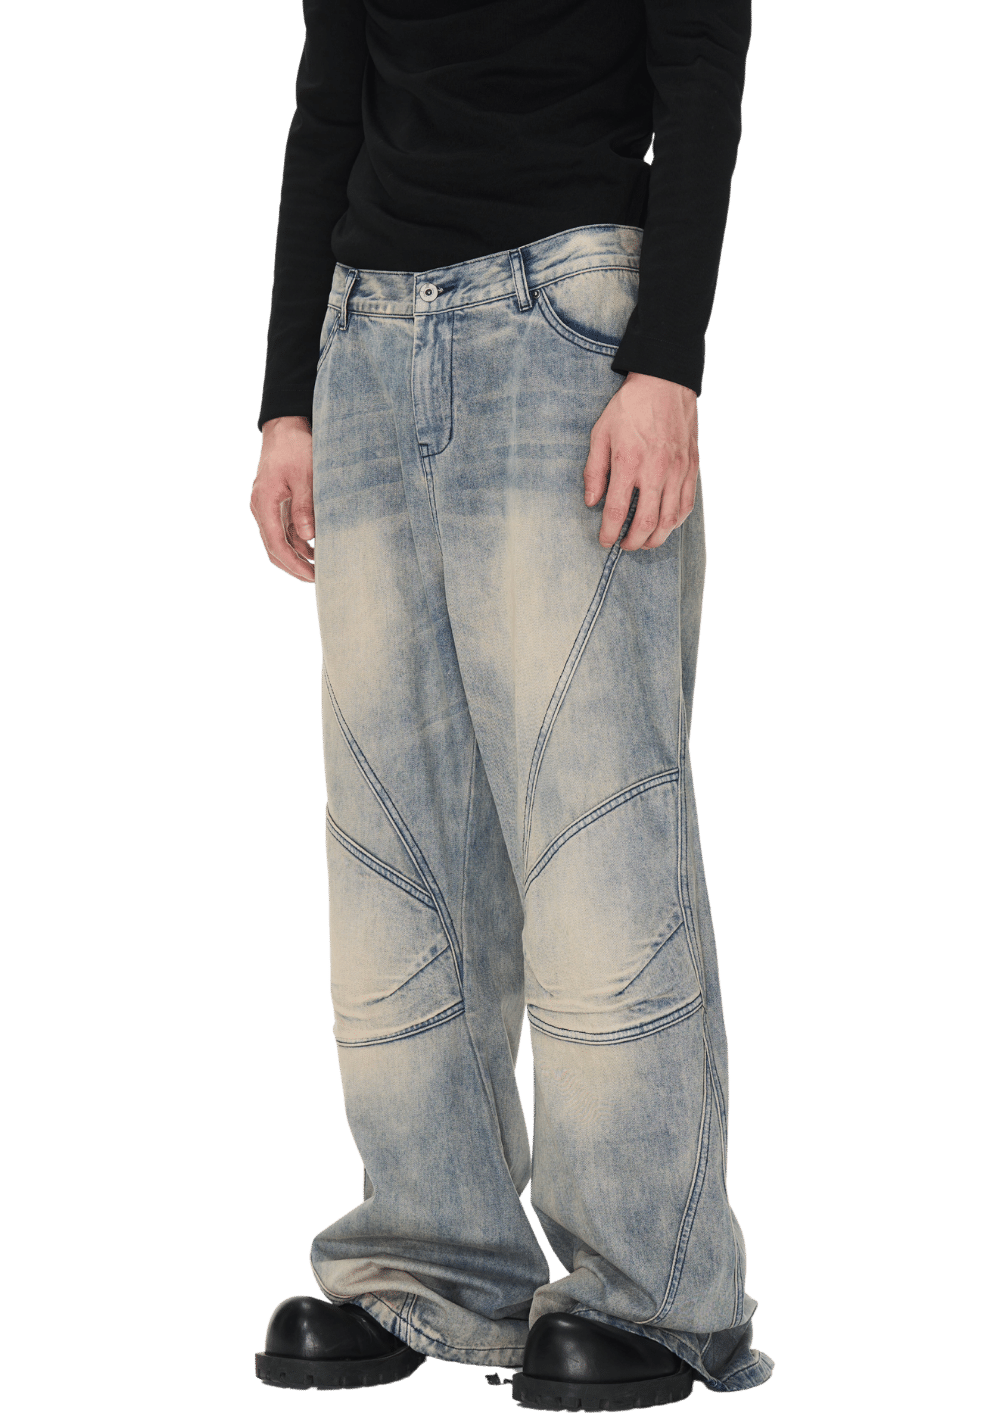 ISSEYMIYAKE一点物 Personsoul Destructive Denim Jeans - デニム/ジーンズ